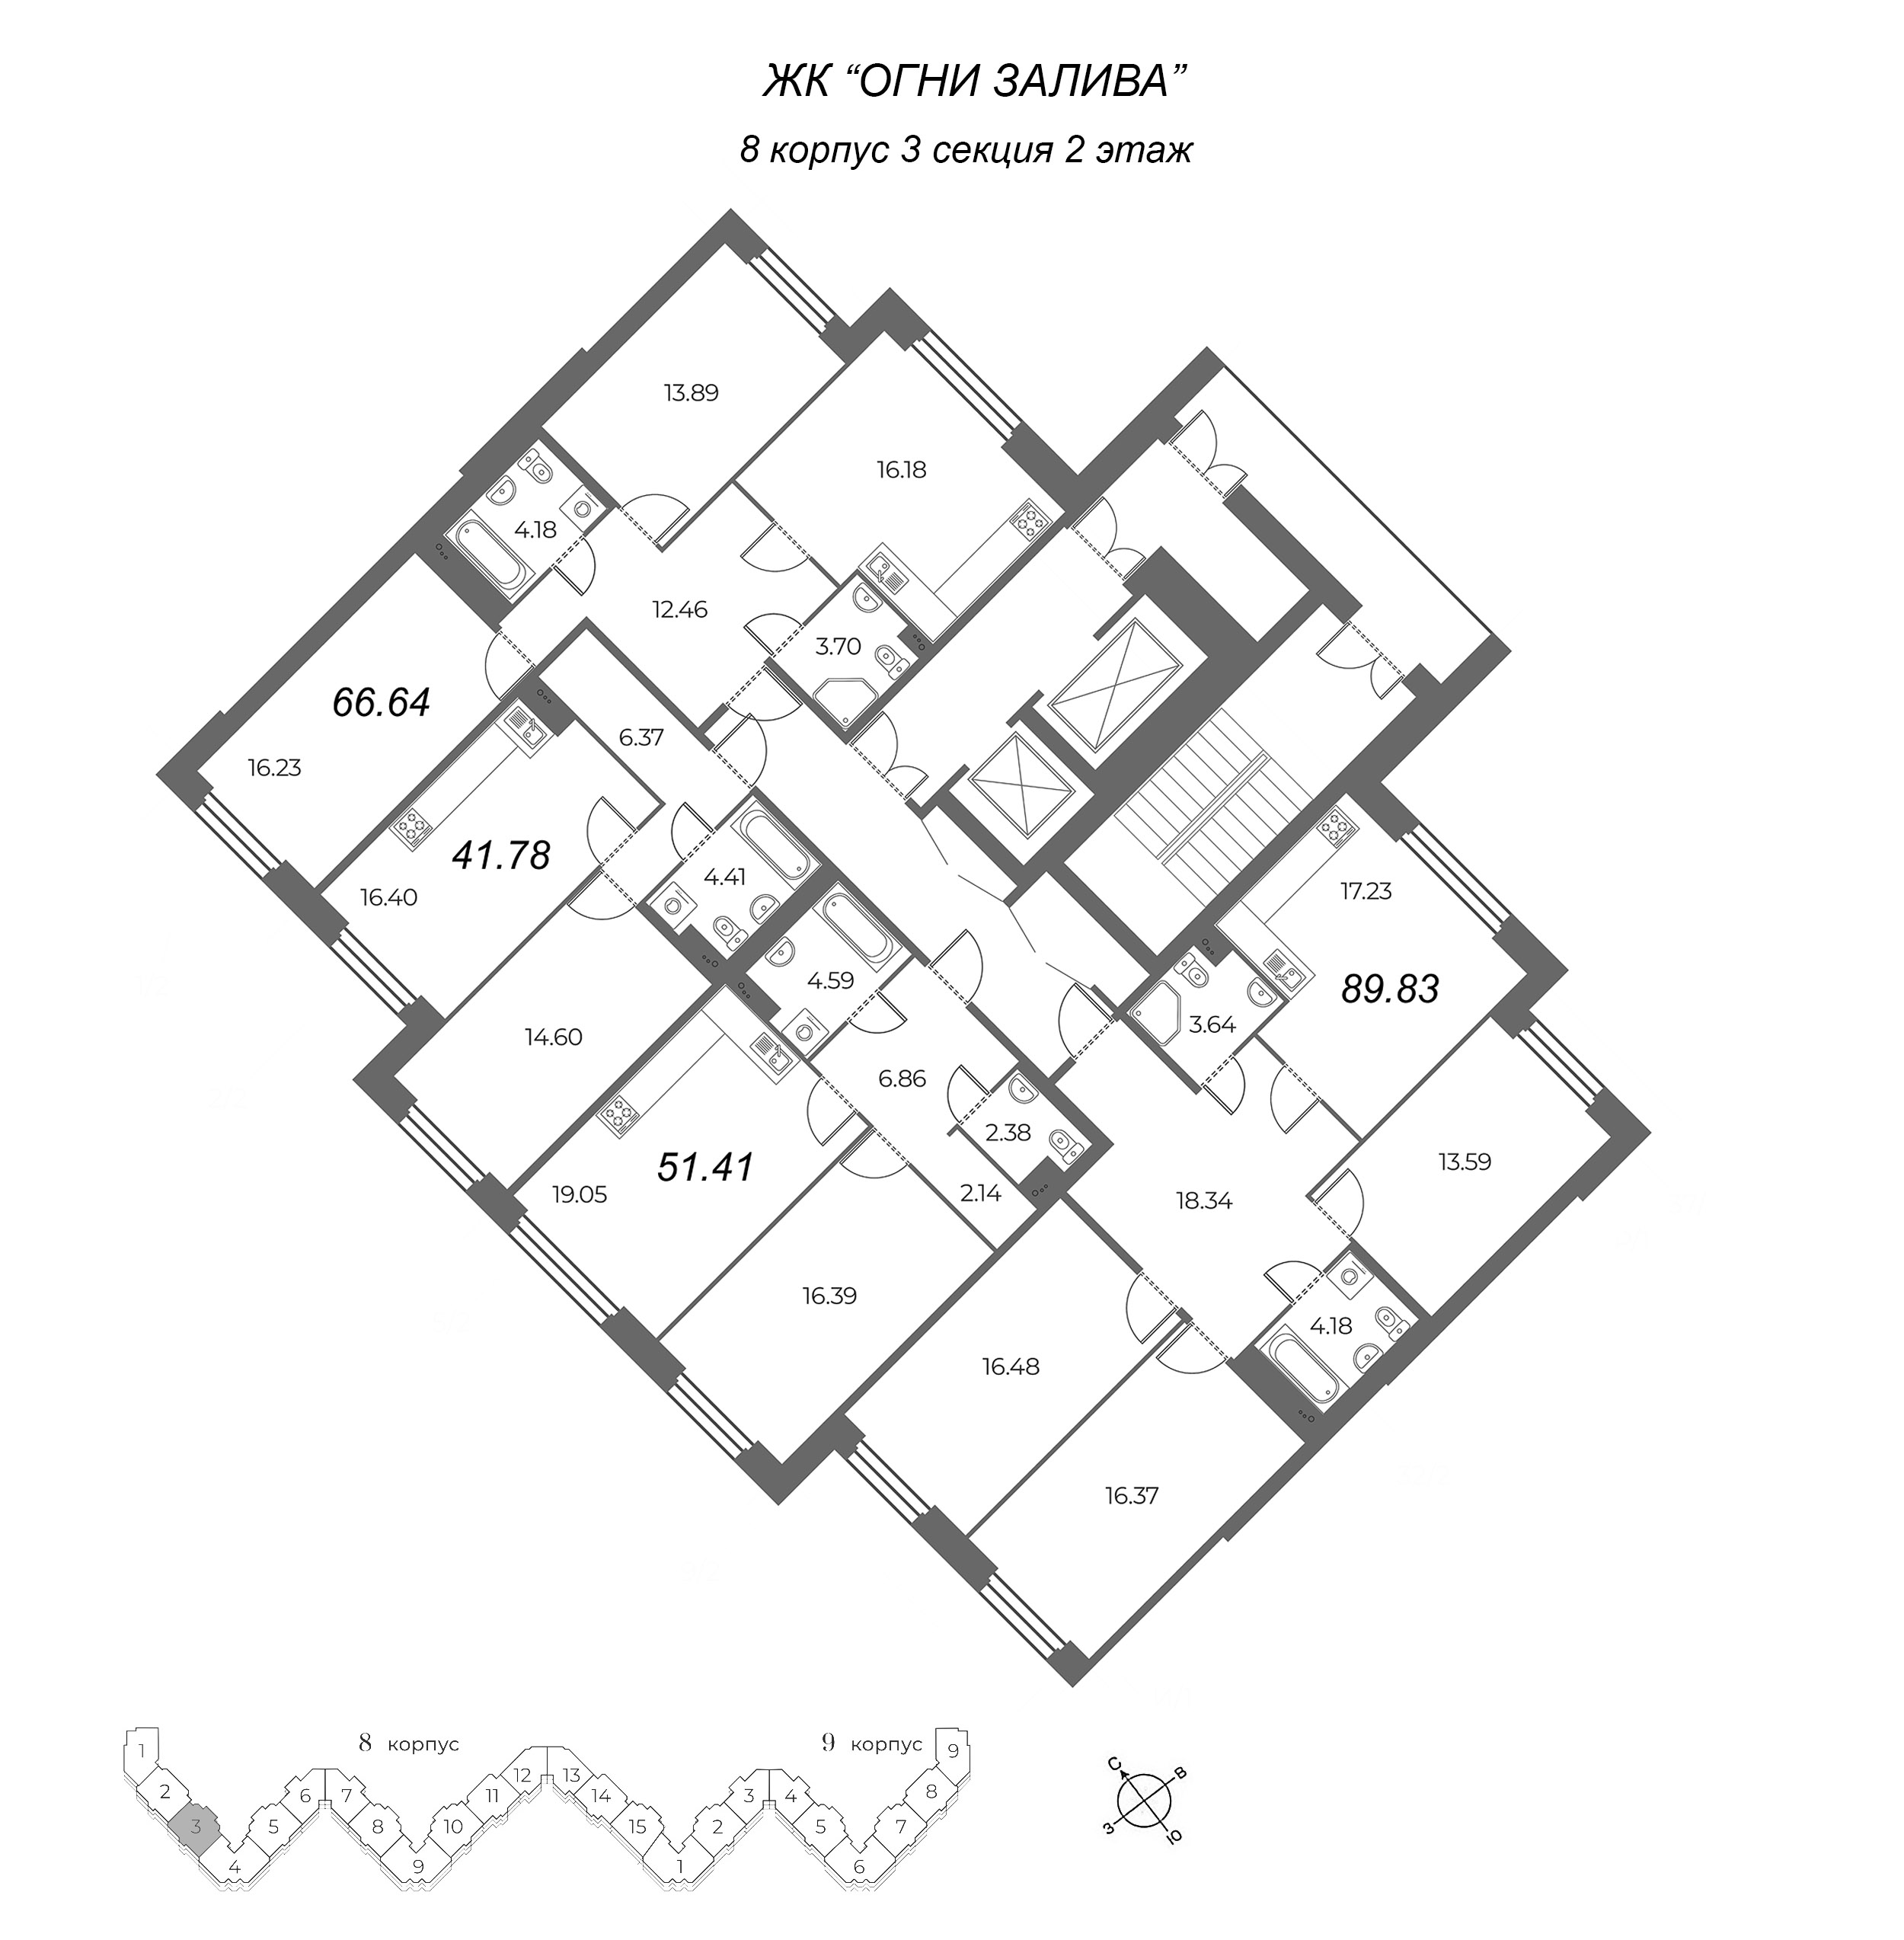 4-комнатная (Евро) квартира, 89.83 м² - планировка этажа